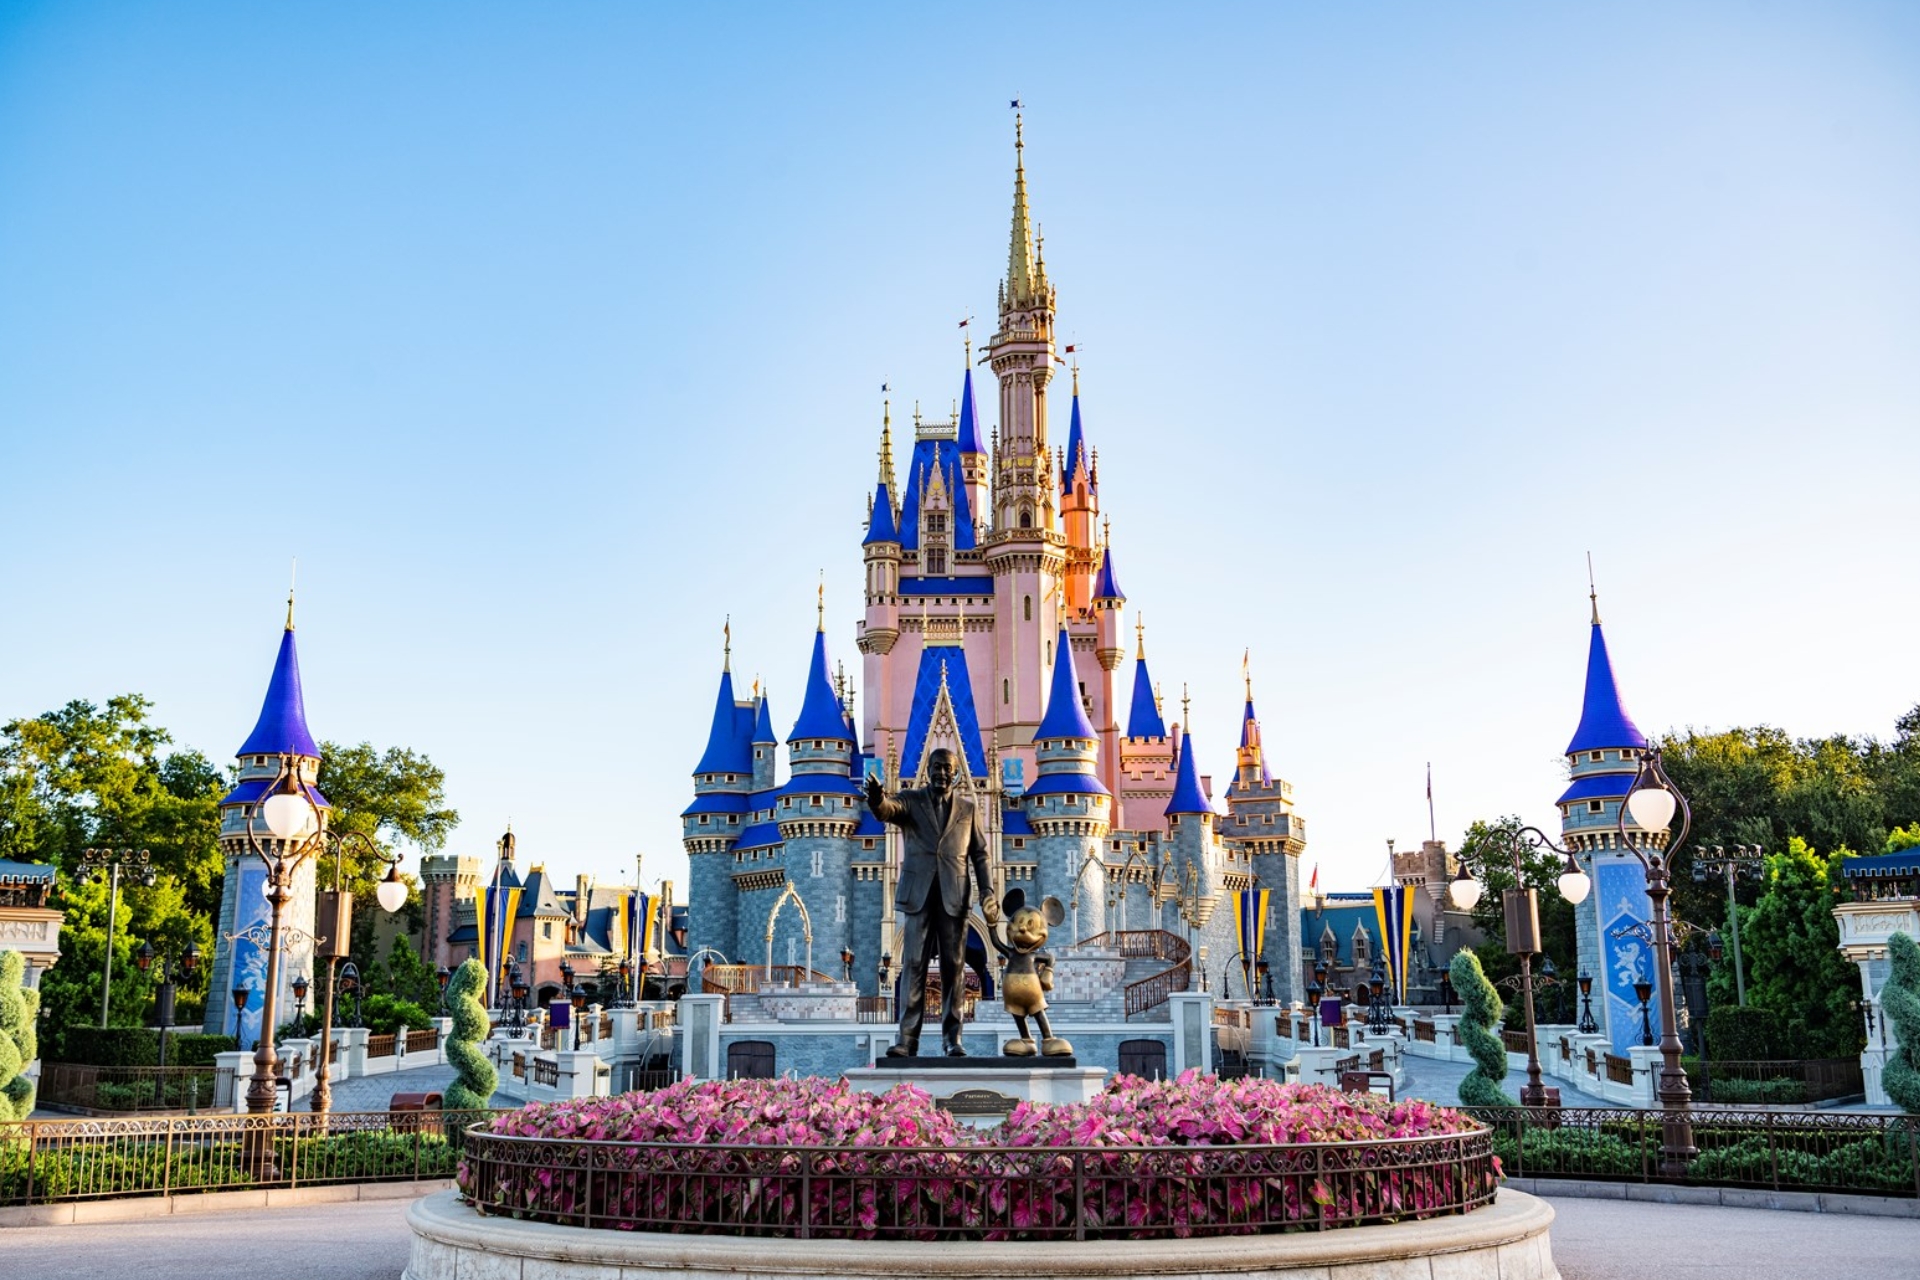 Cinderella's Castle rises into a blue sky at the Magic Kingdom Park at Walt Disney World, Florida.